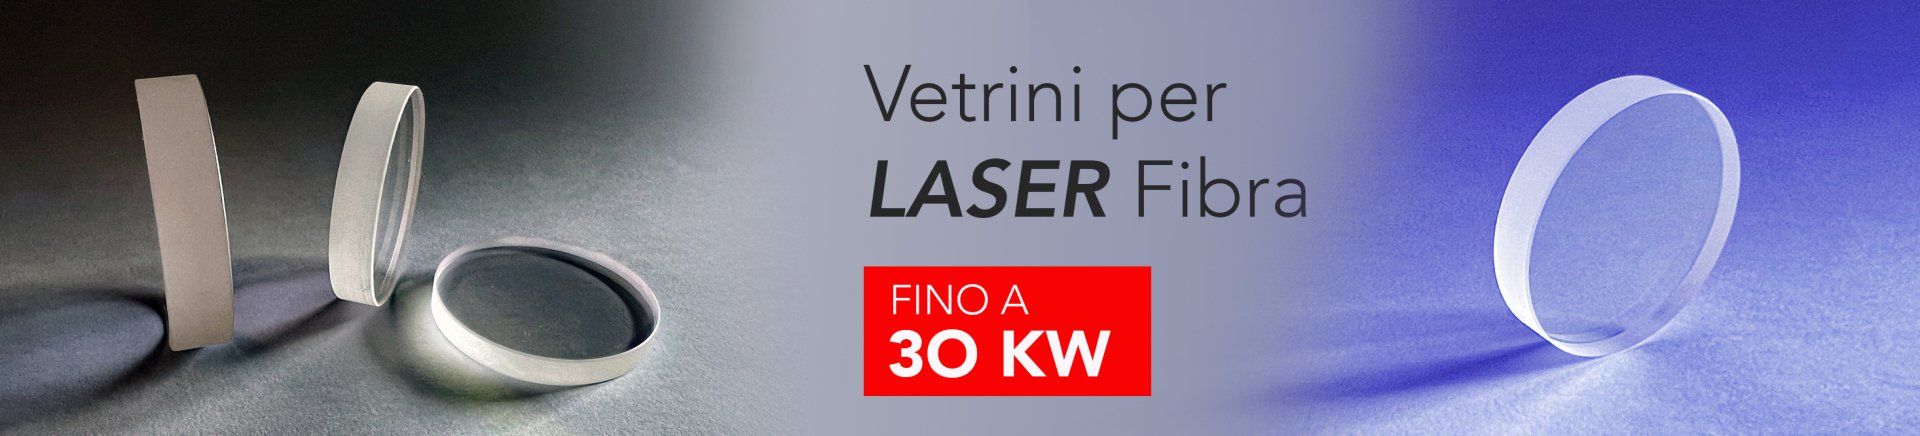 vetrini per laser fibra